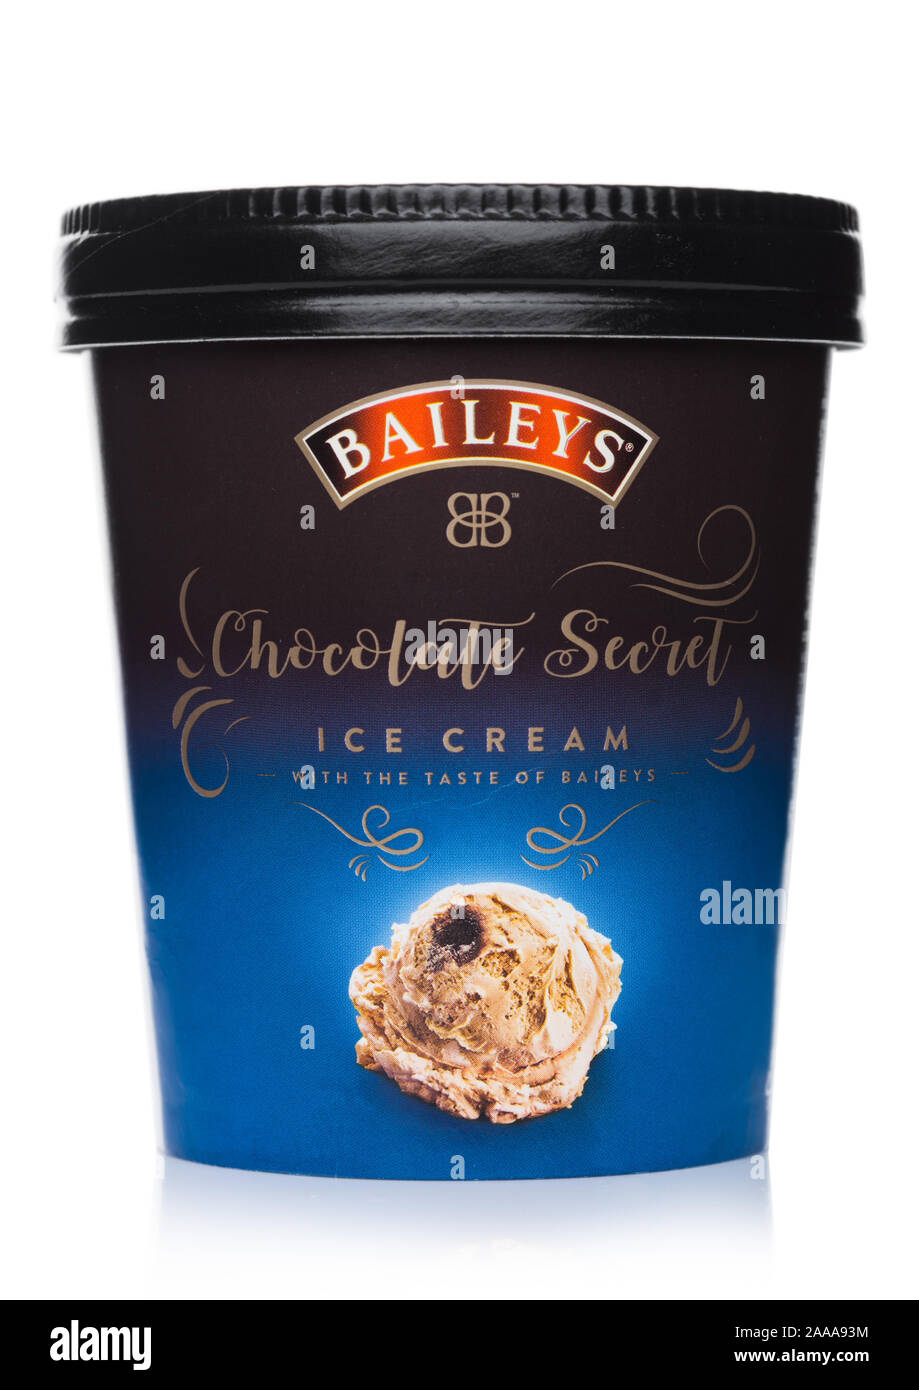 LONDON, UK - NOVEMBER 10, 2019: Baileys chocolate secret ice cream on white. Stock Photo